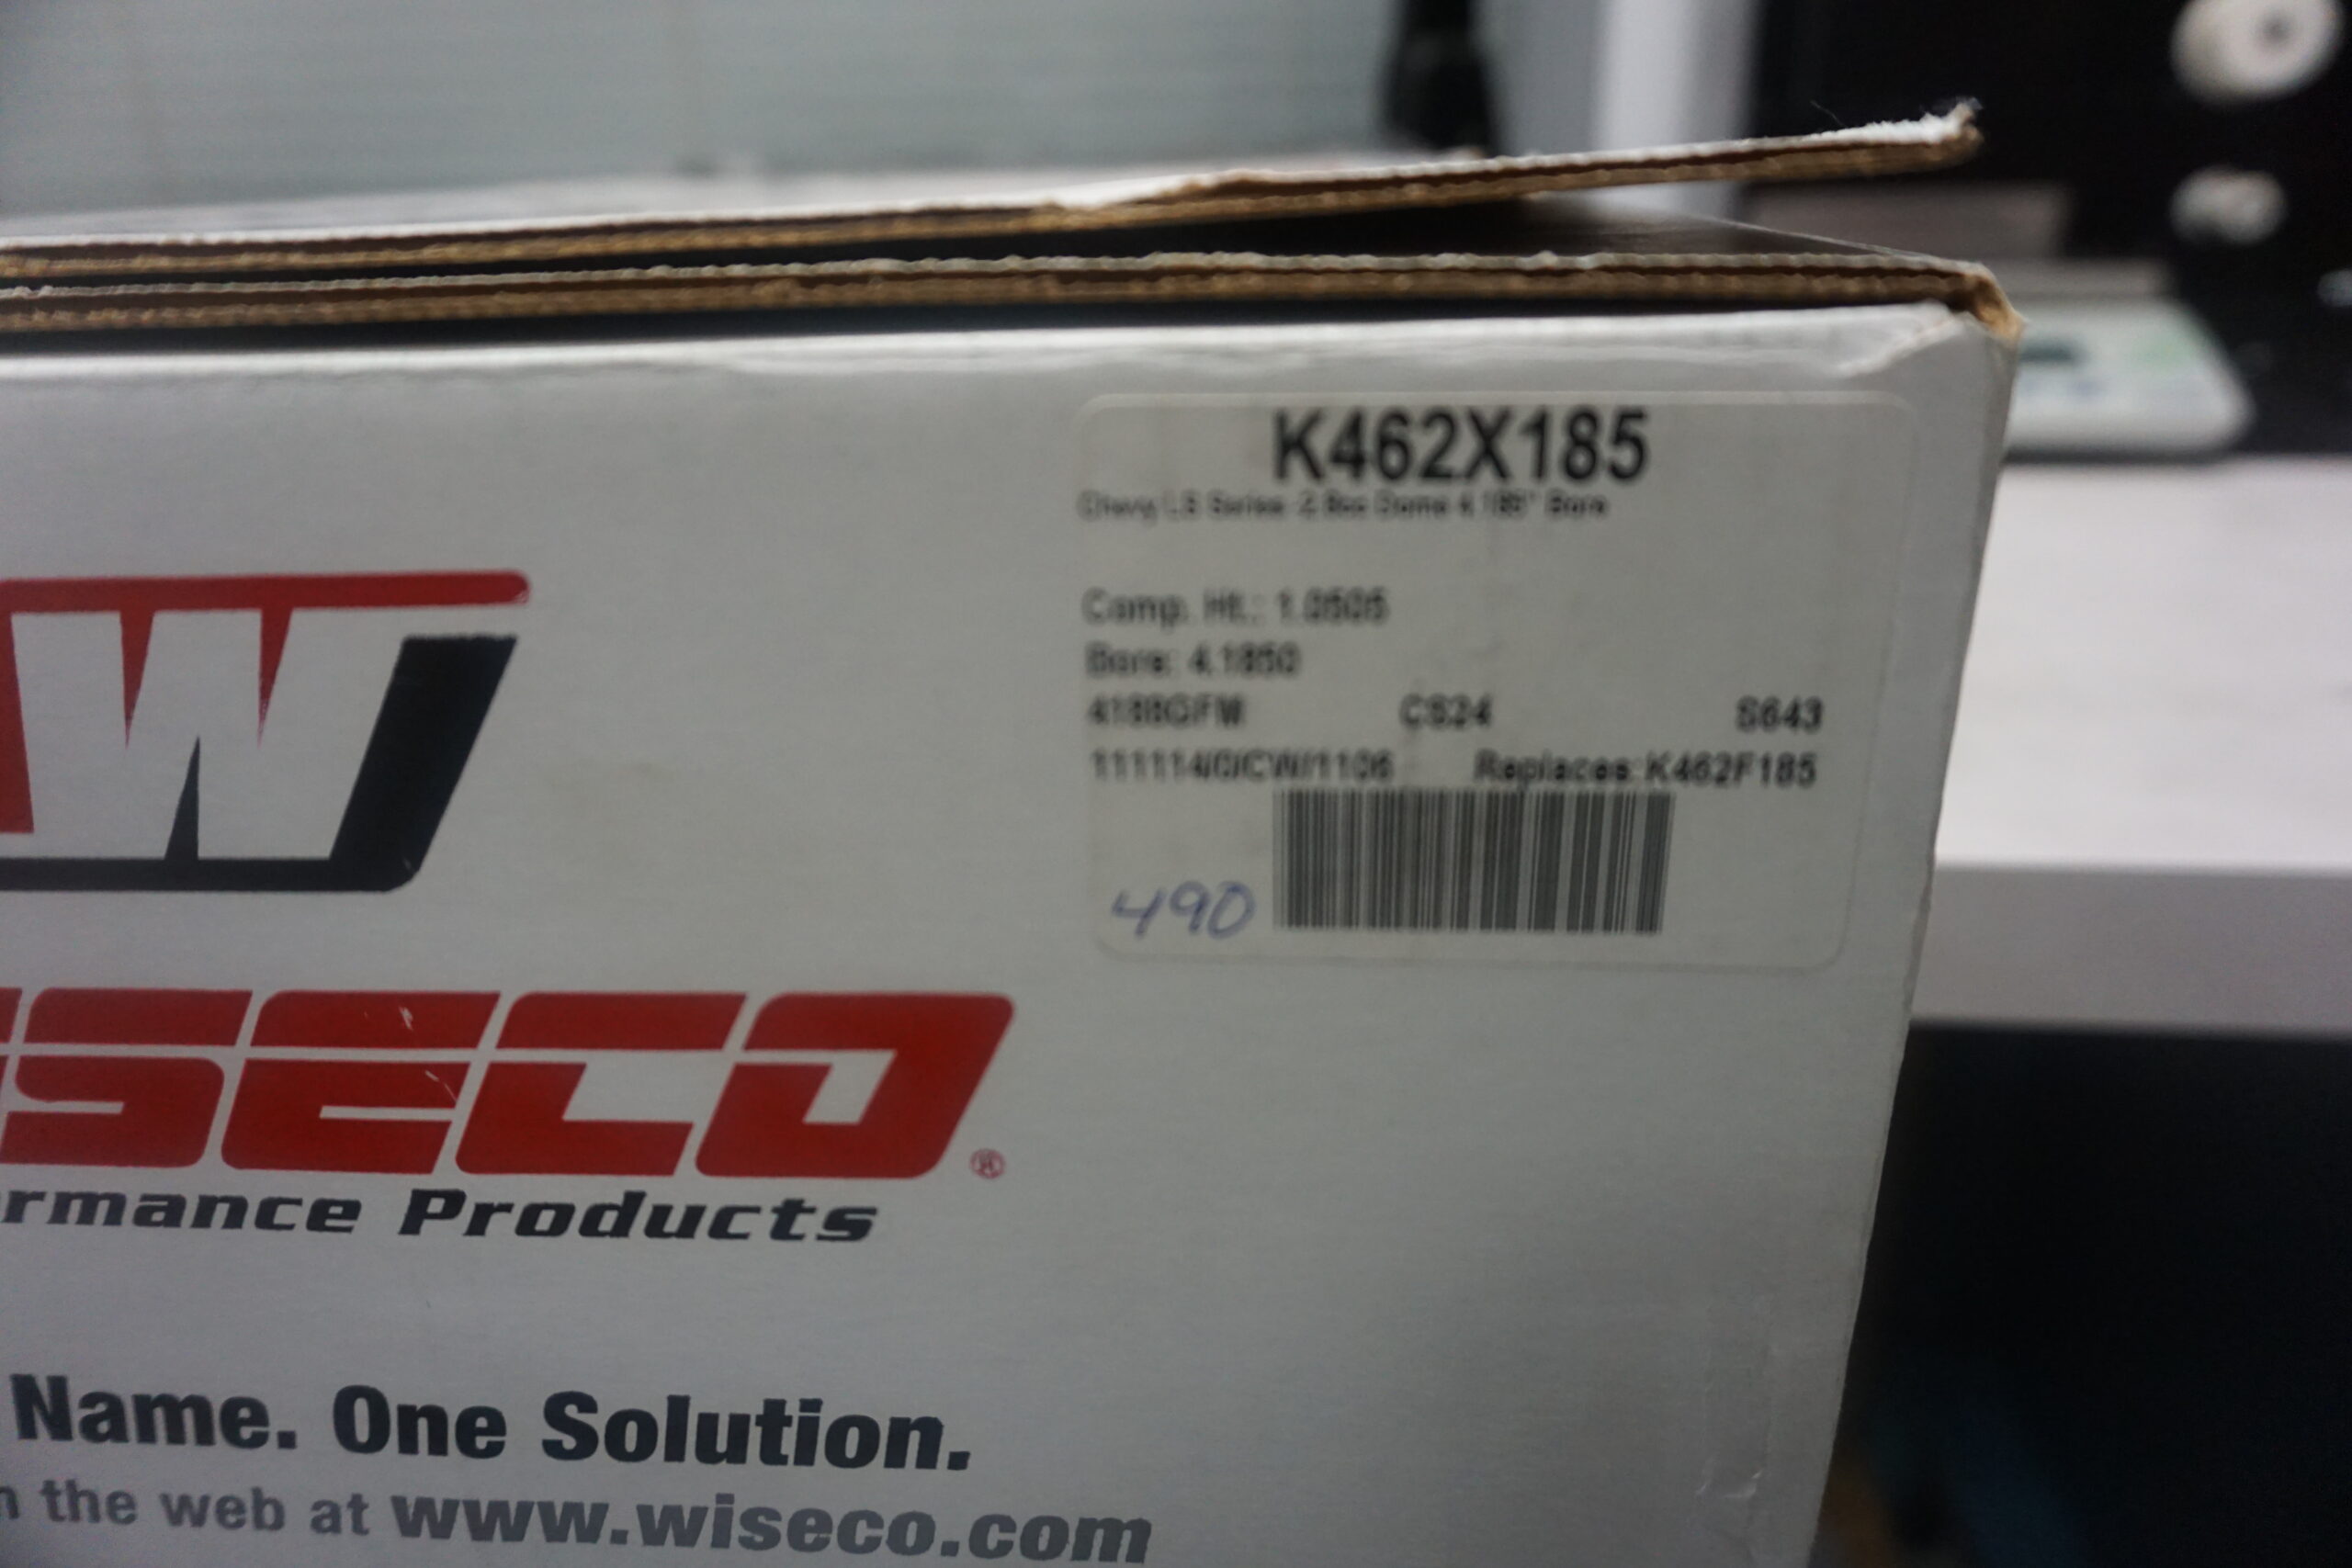 Wiseco Professional Series LS Piston Kit K462X185